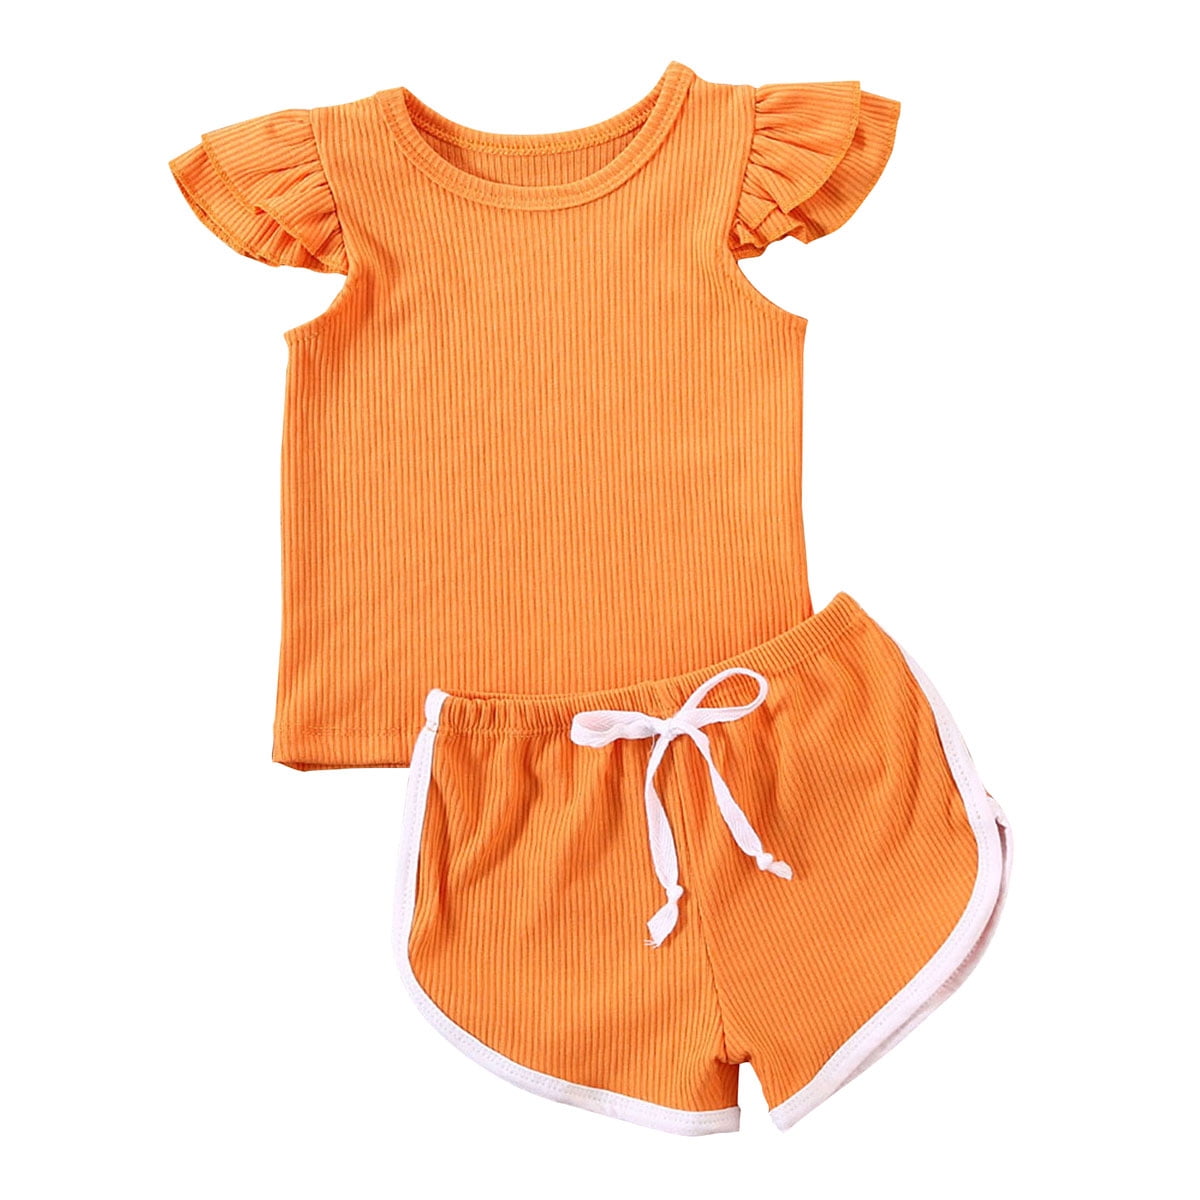 Orange Baby Girls Outfit Sets - Walmart.com